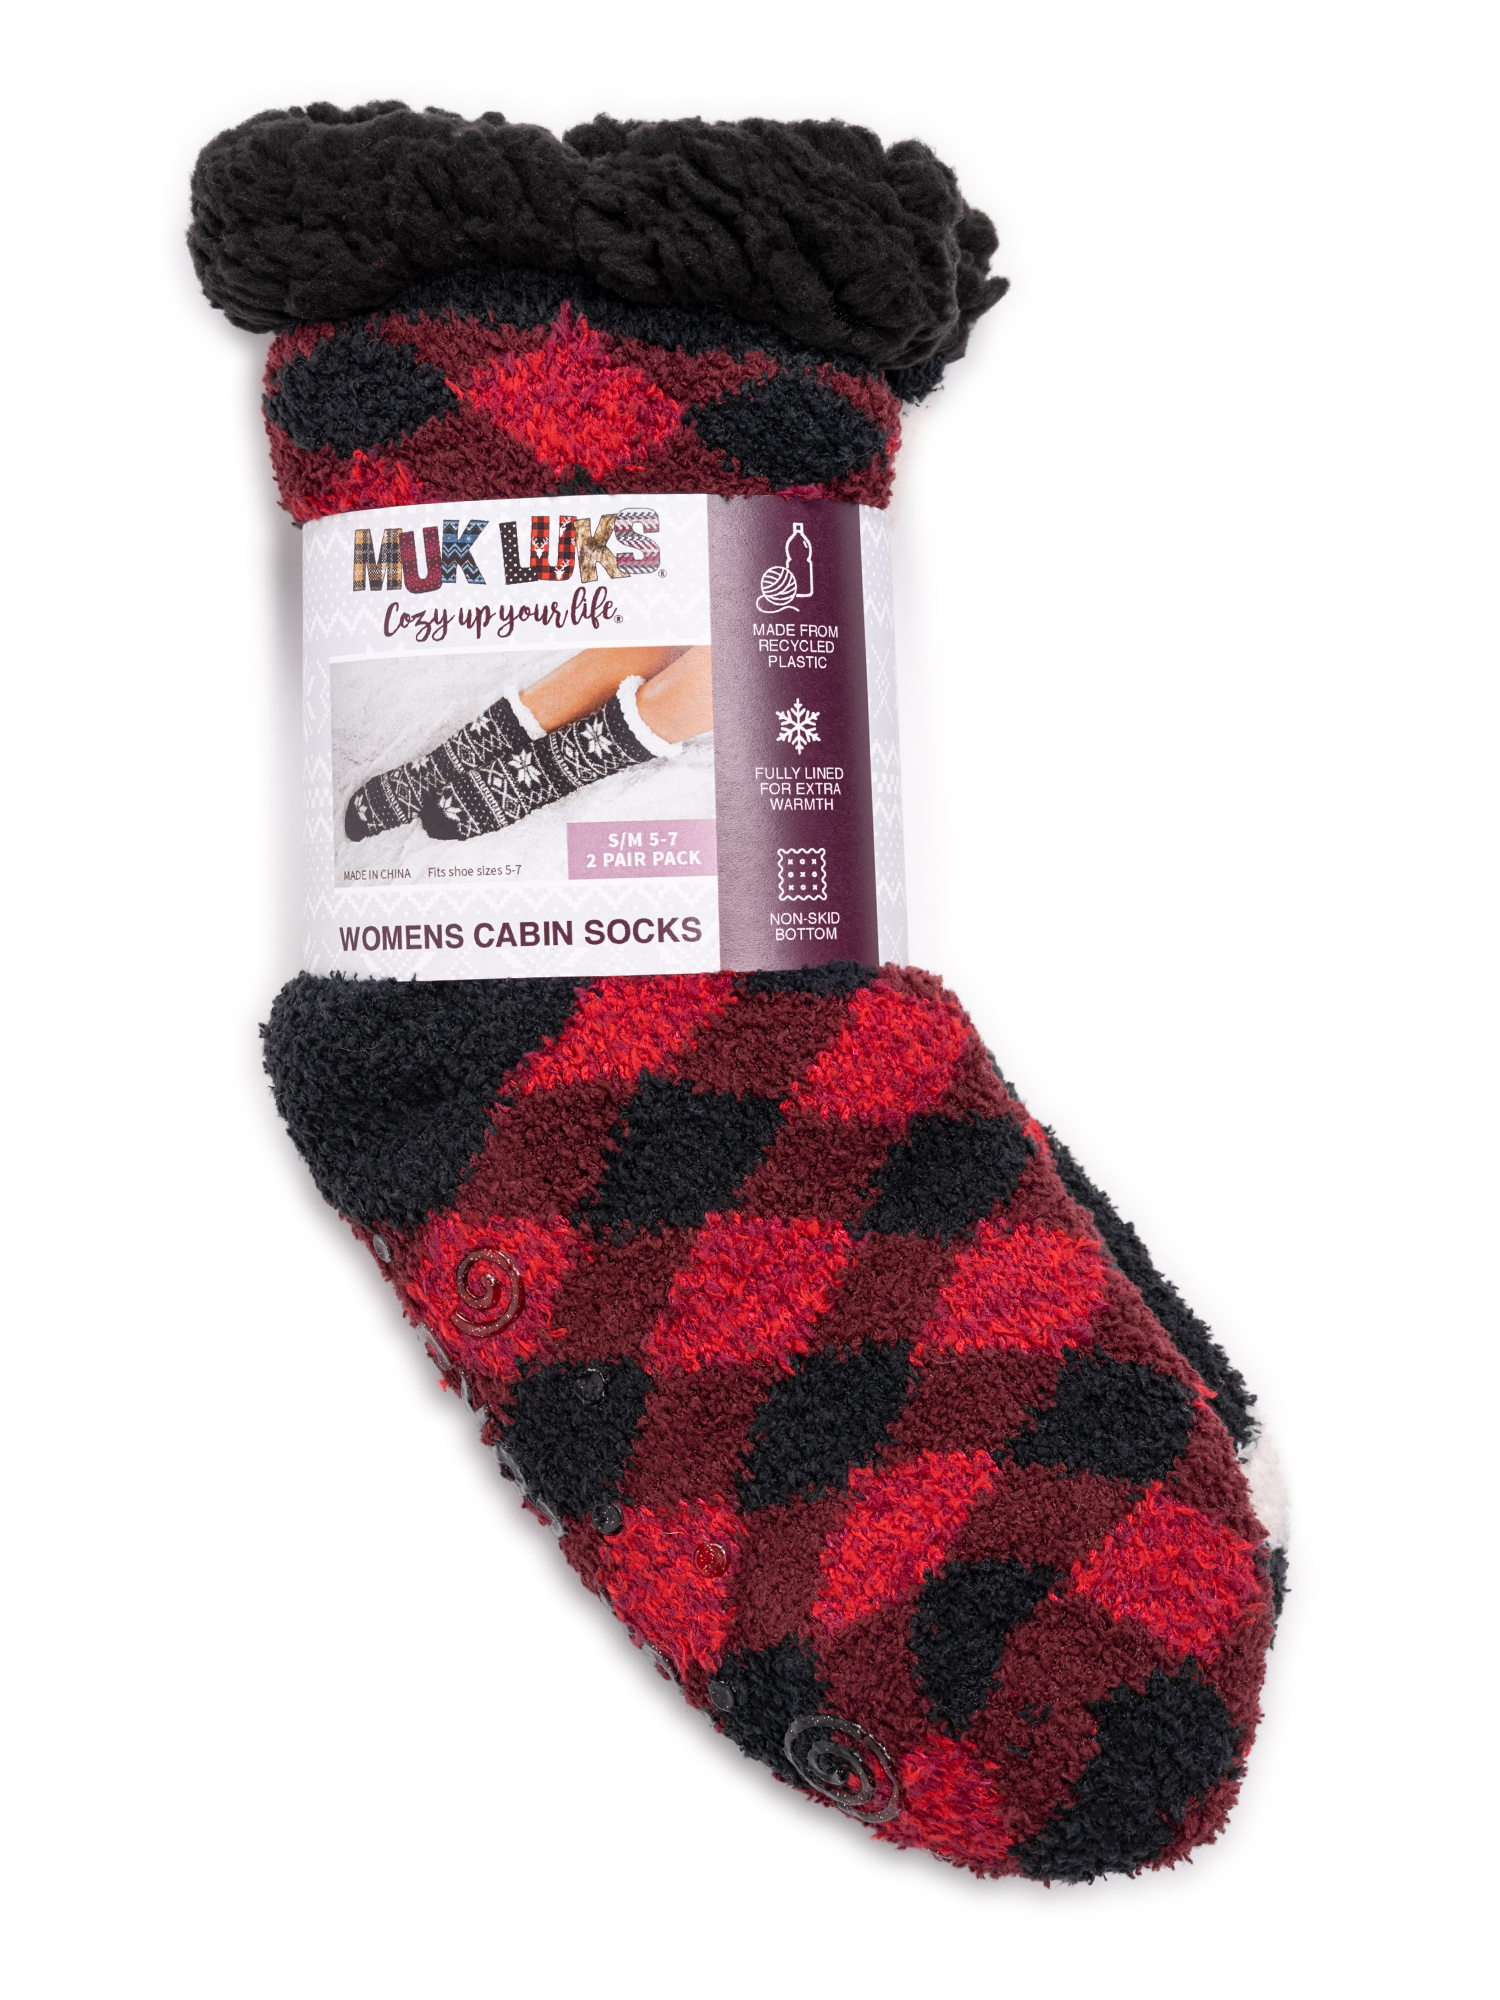 MUK LUKS Women's Cabin Socks, 2 Pairs - image 4 of 5